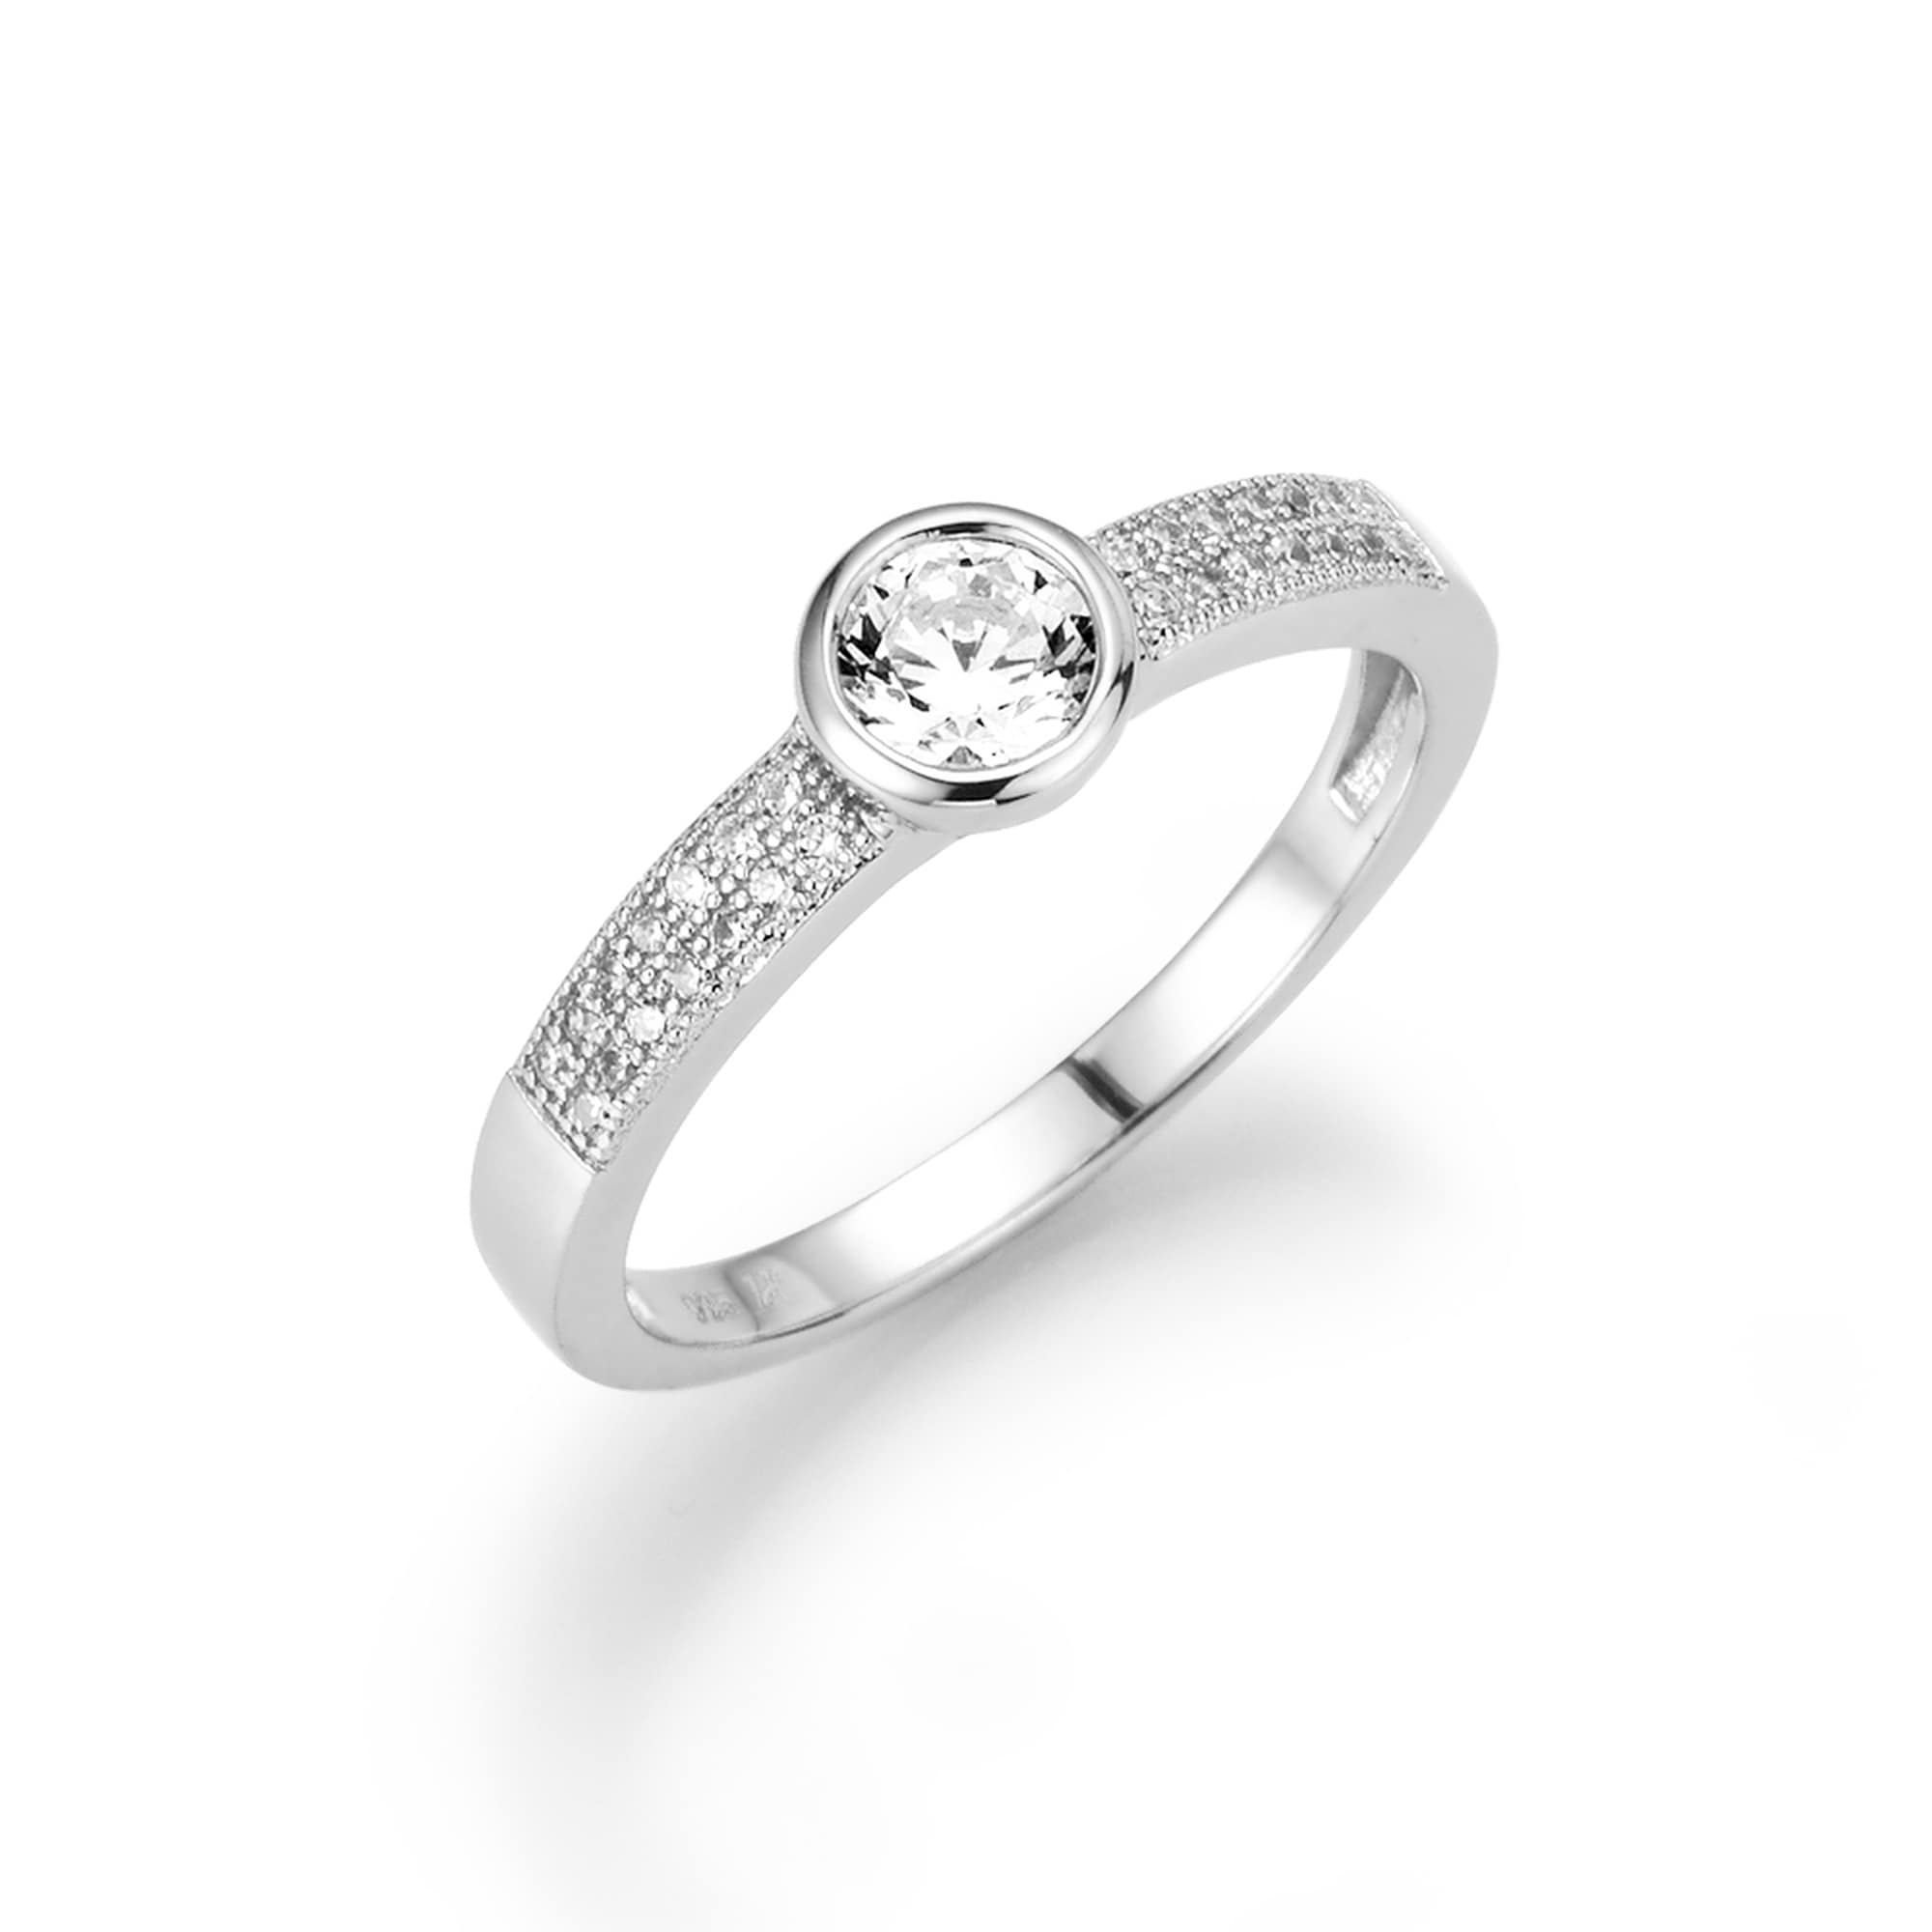 Verlobungsring »Ring wundervoll mit Zirkonia, Silber 925«